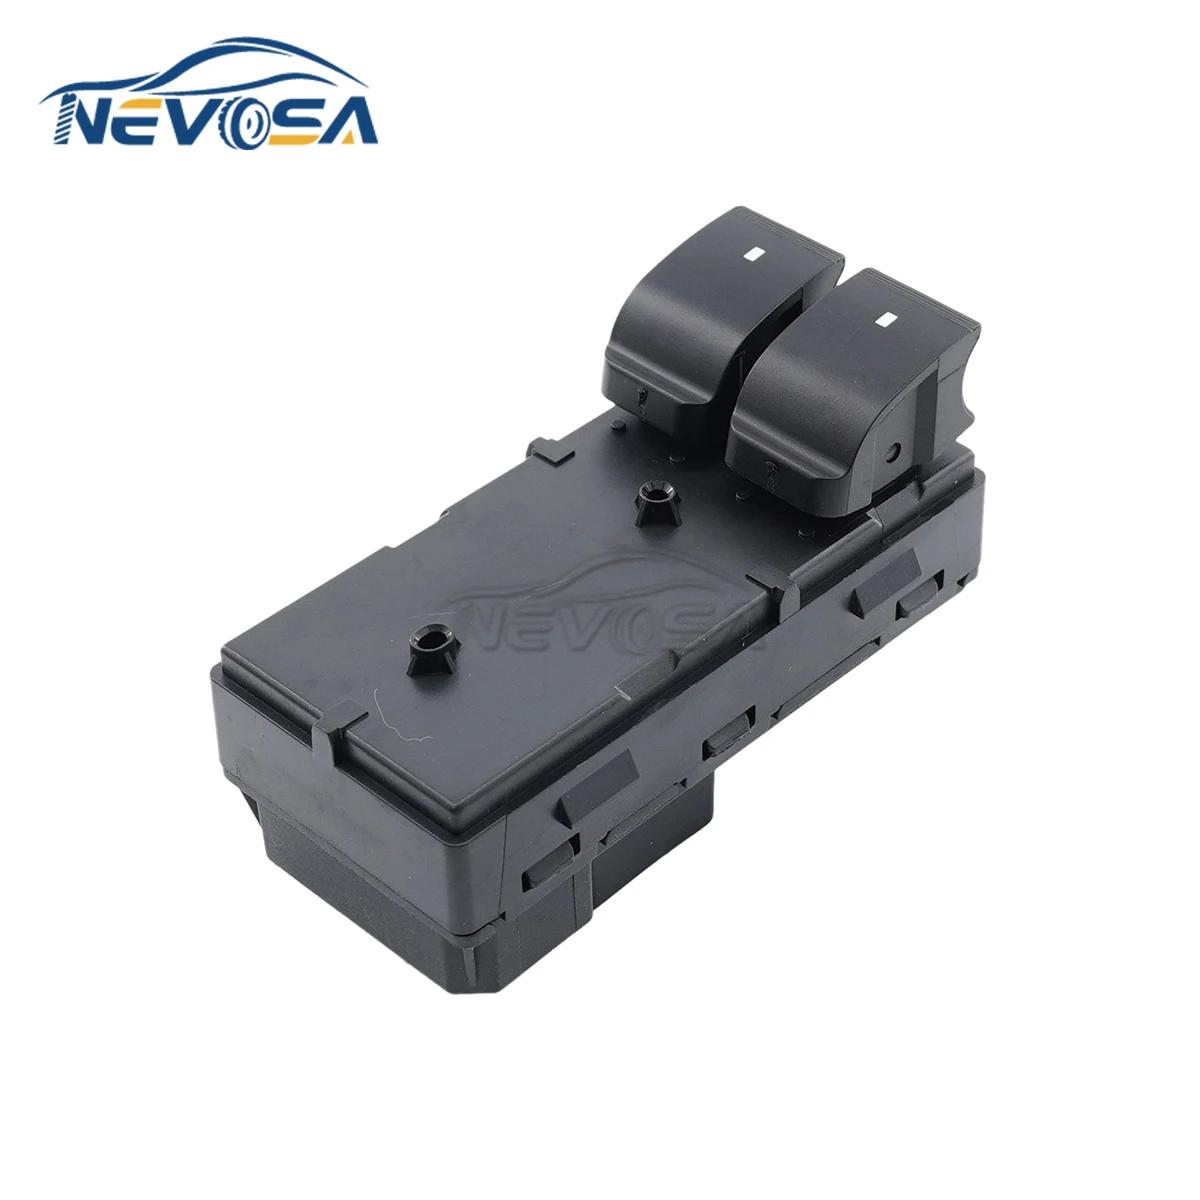 

Nevosa 20945132 Power Car Window Lifter Button Switch For Chevrolet Silverado For GMC Sierra 1500 2500 3500 HD car accessories